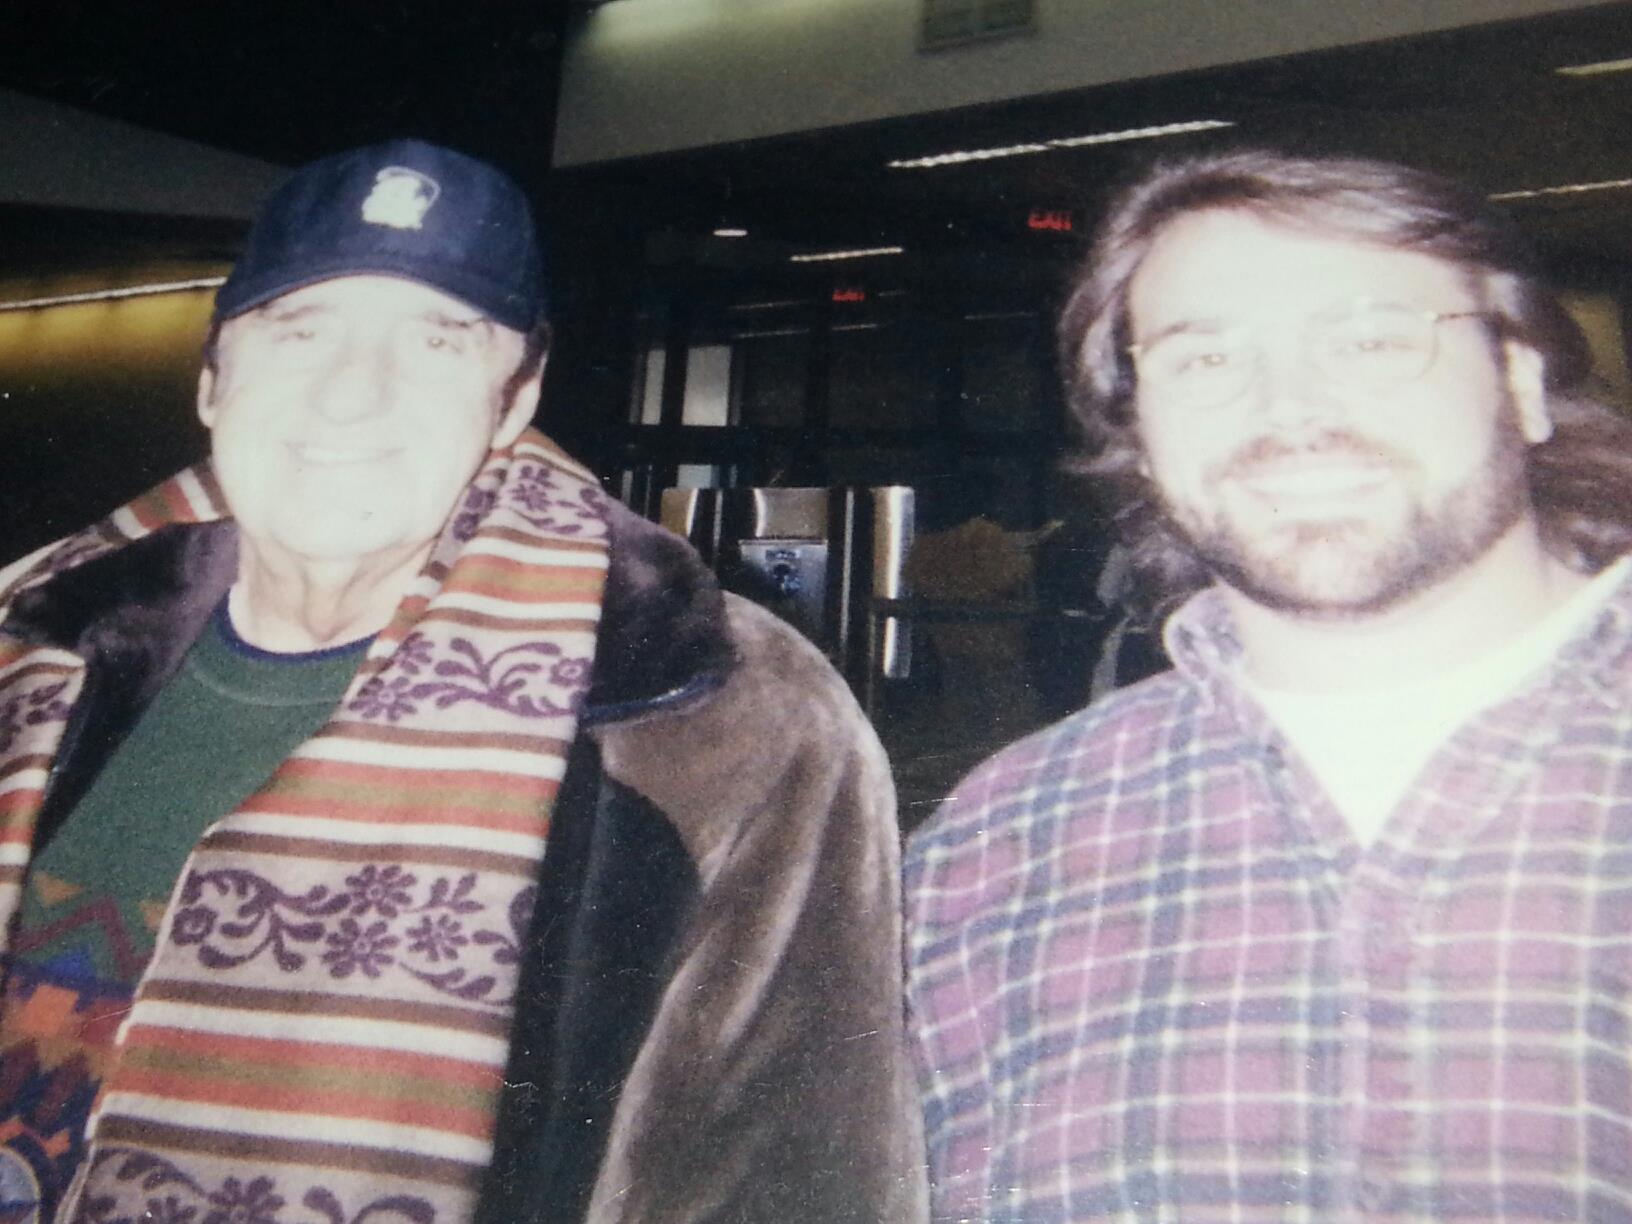 Me and Jim Nabors at the airport in Atlanta during Super Bowl week.